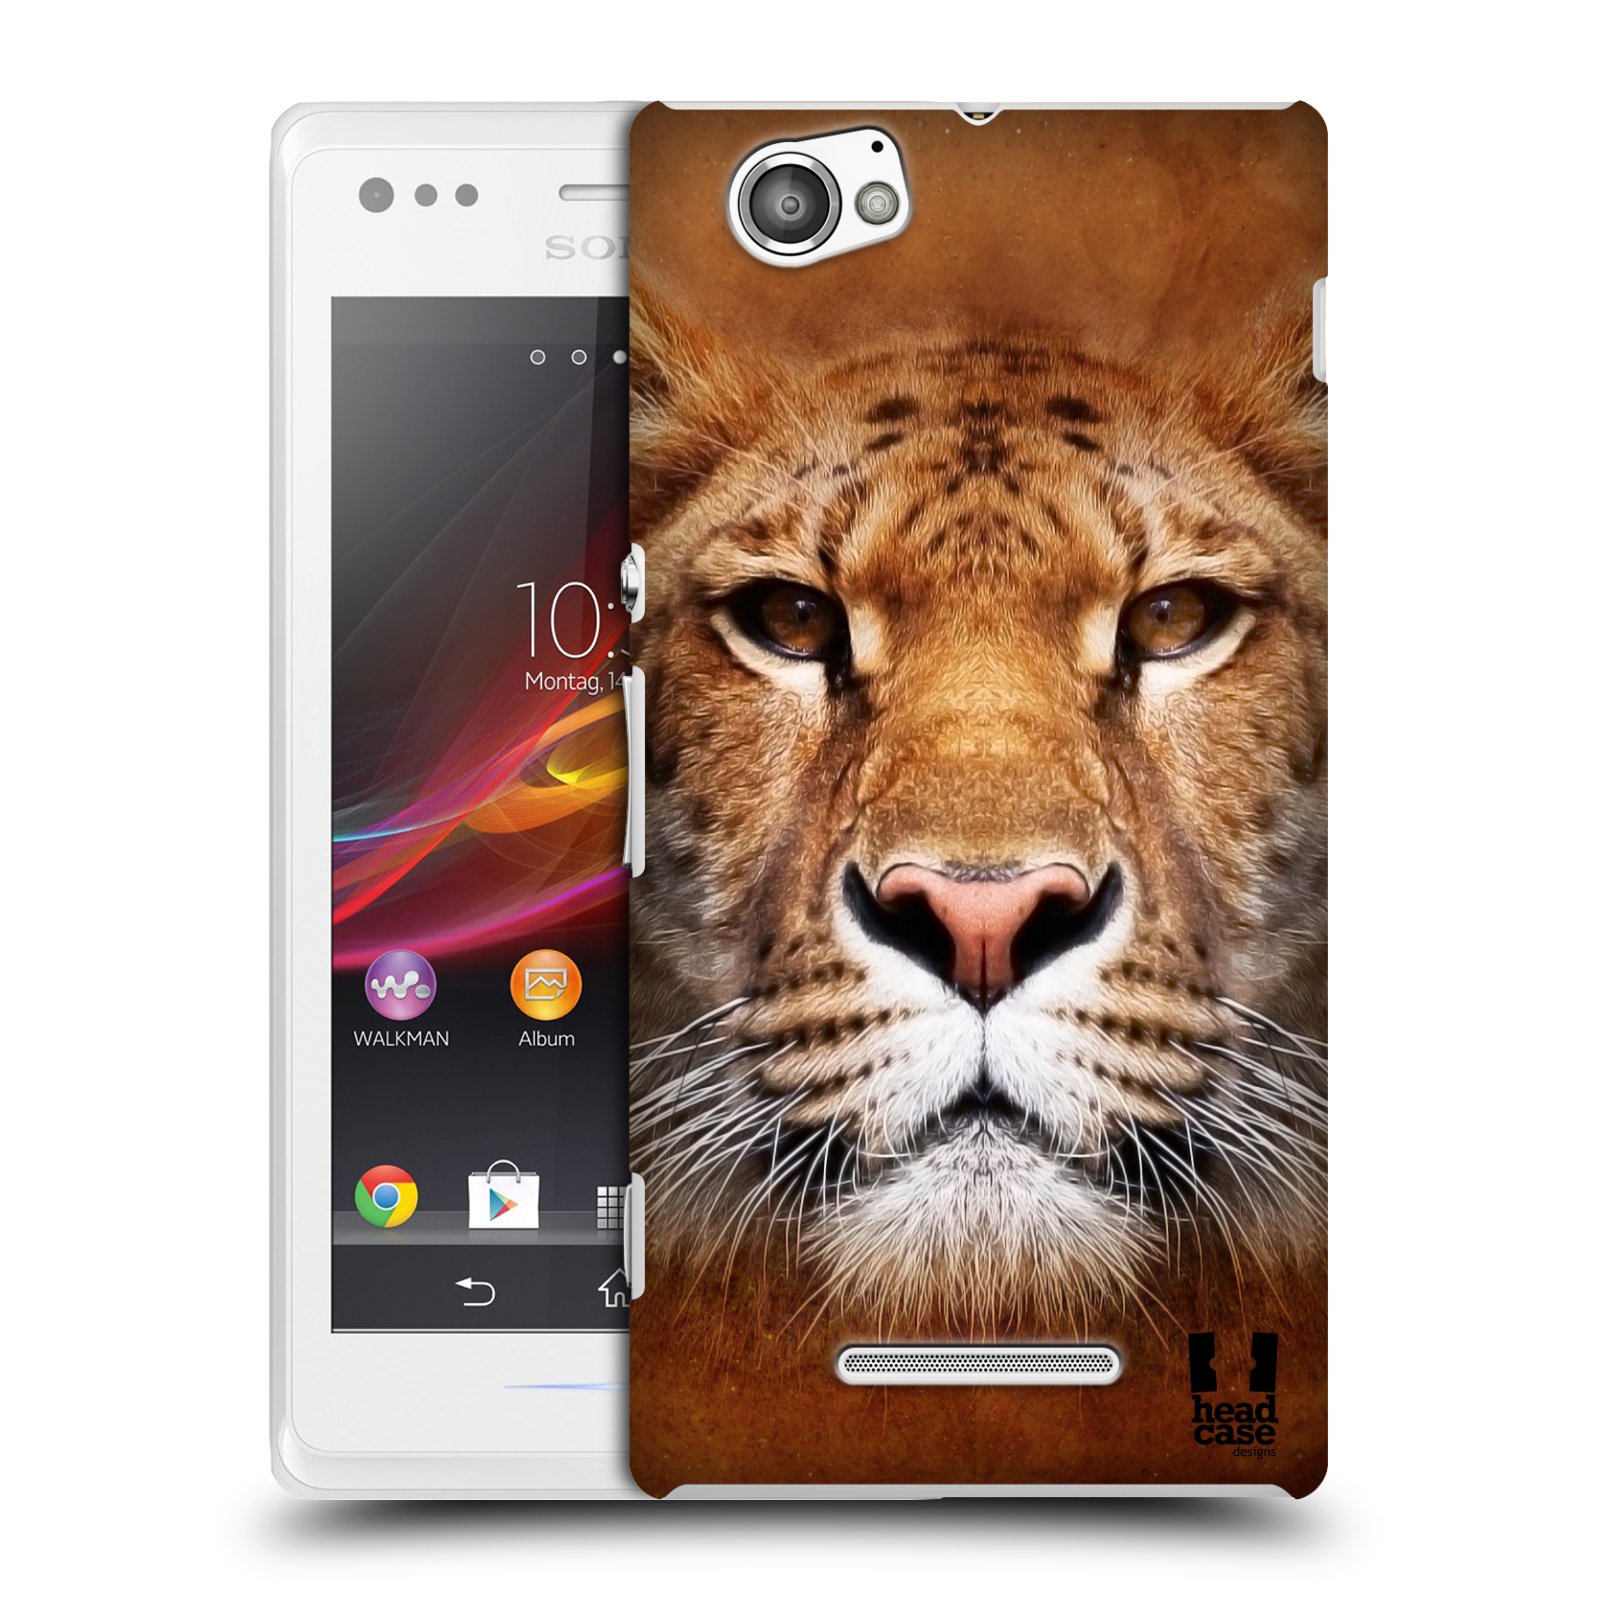 HEAD CASE plastový obal na mobil Sony Xperia M vzor Zvířecí tváře Sibiřský tygr